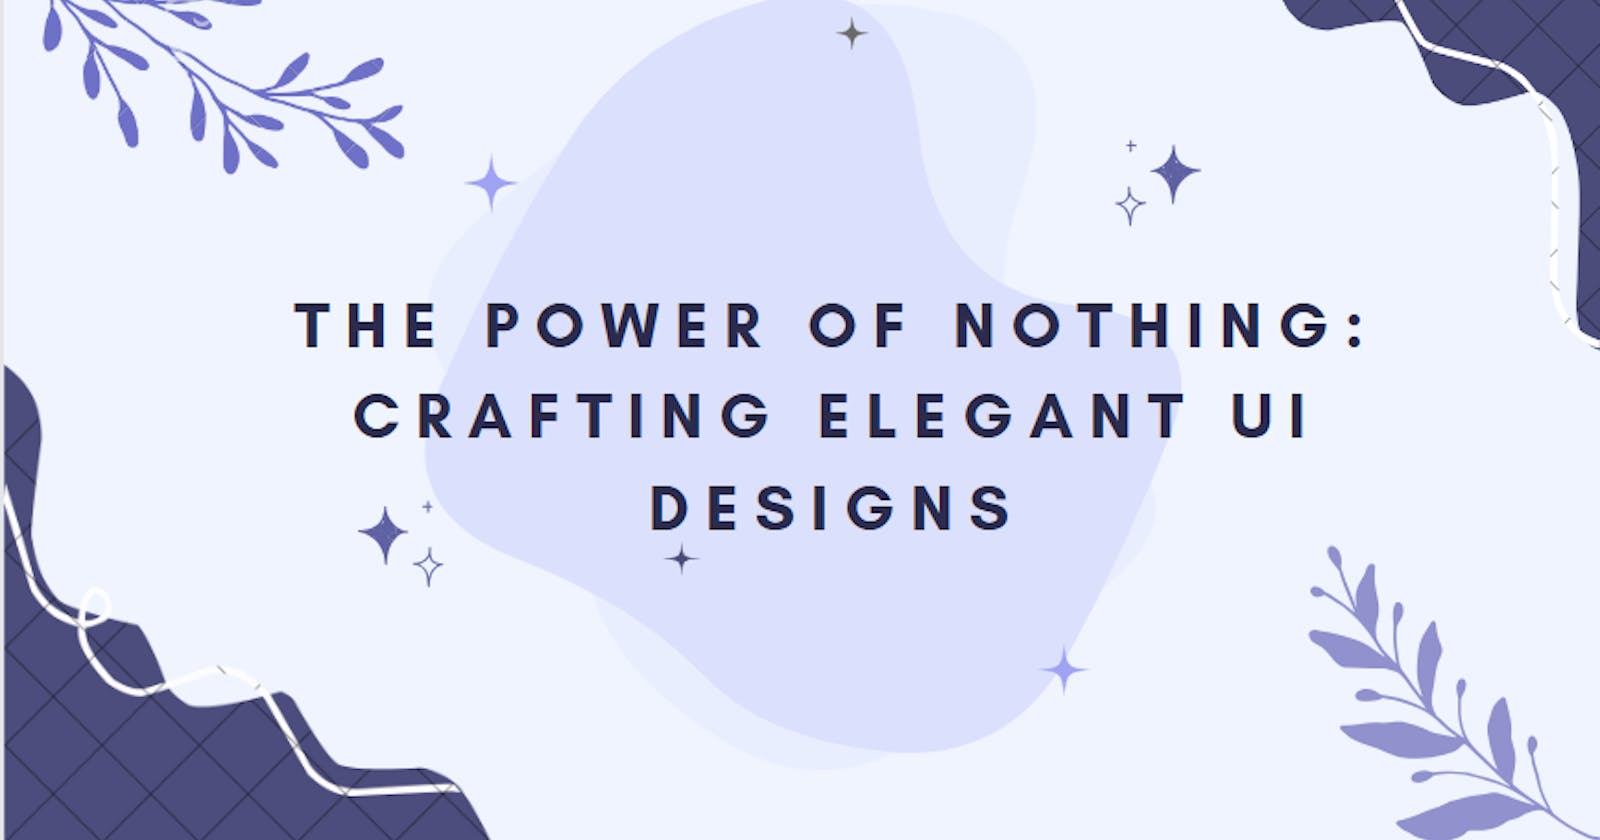 The Power of Nothing: Crafting Elegant UI Designs